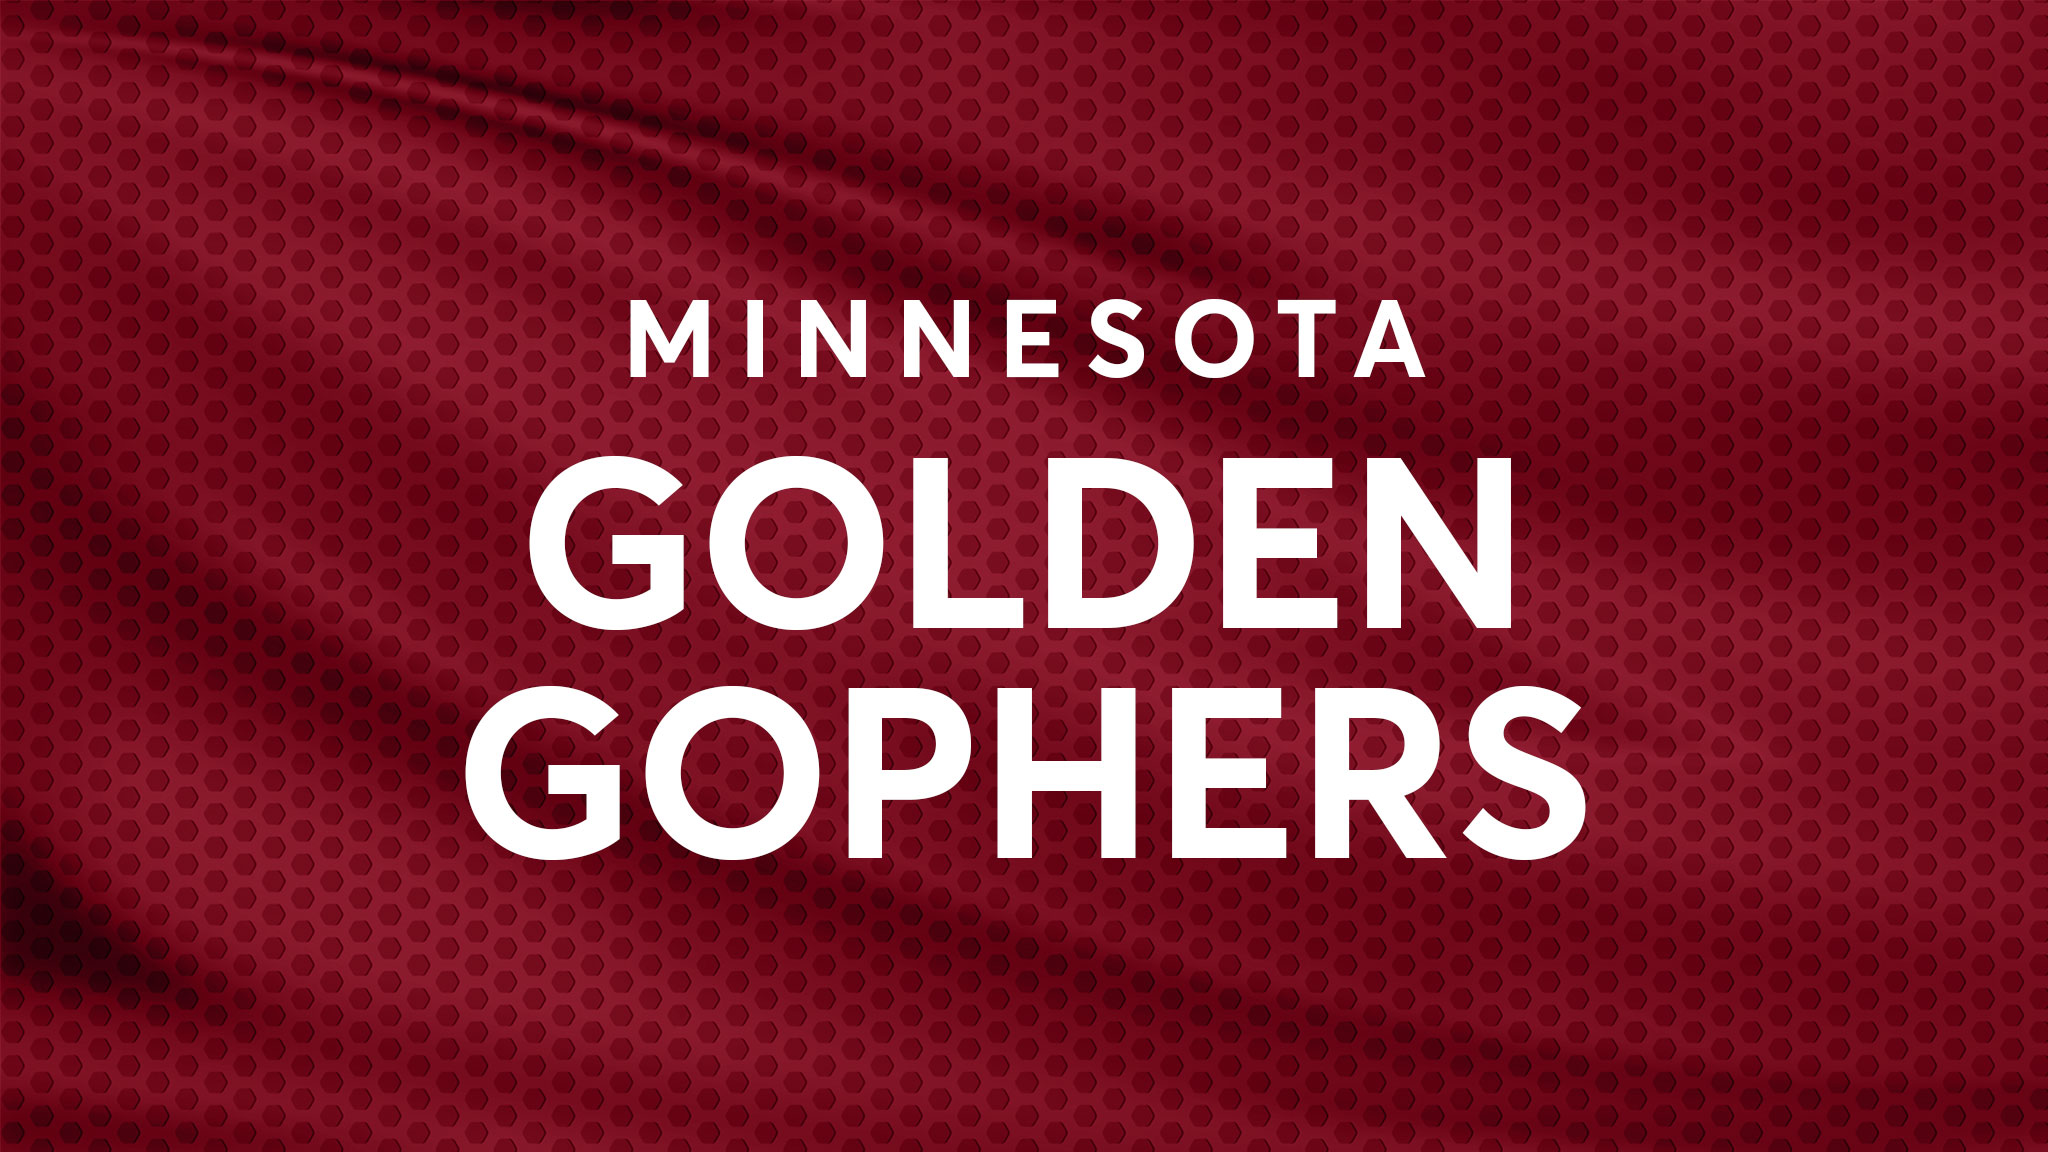 Minnesota Golden Gophers